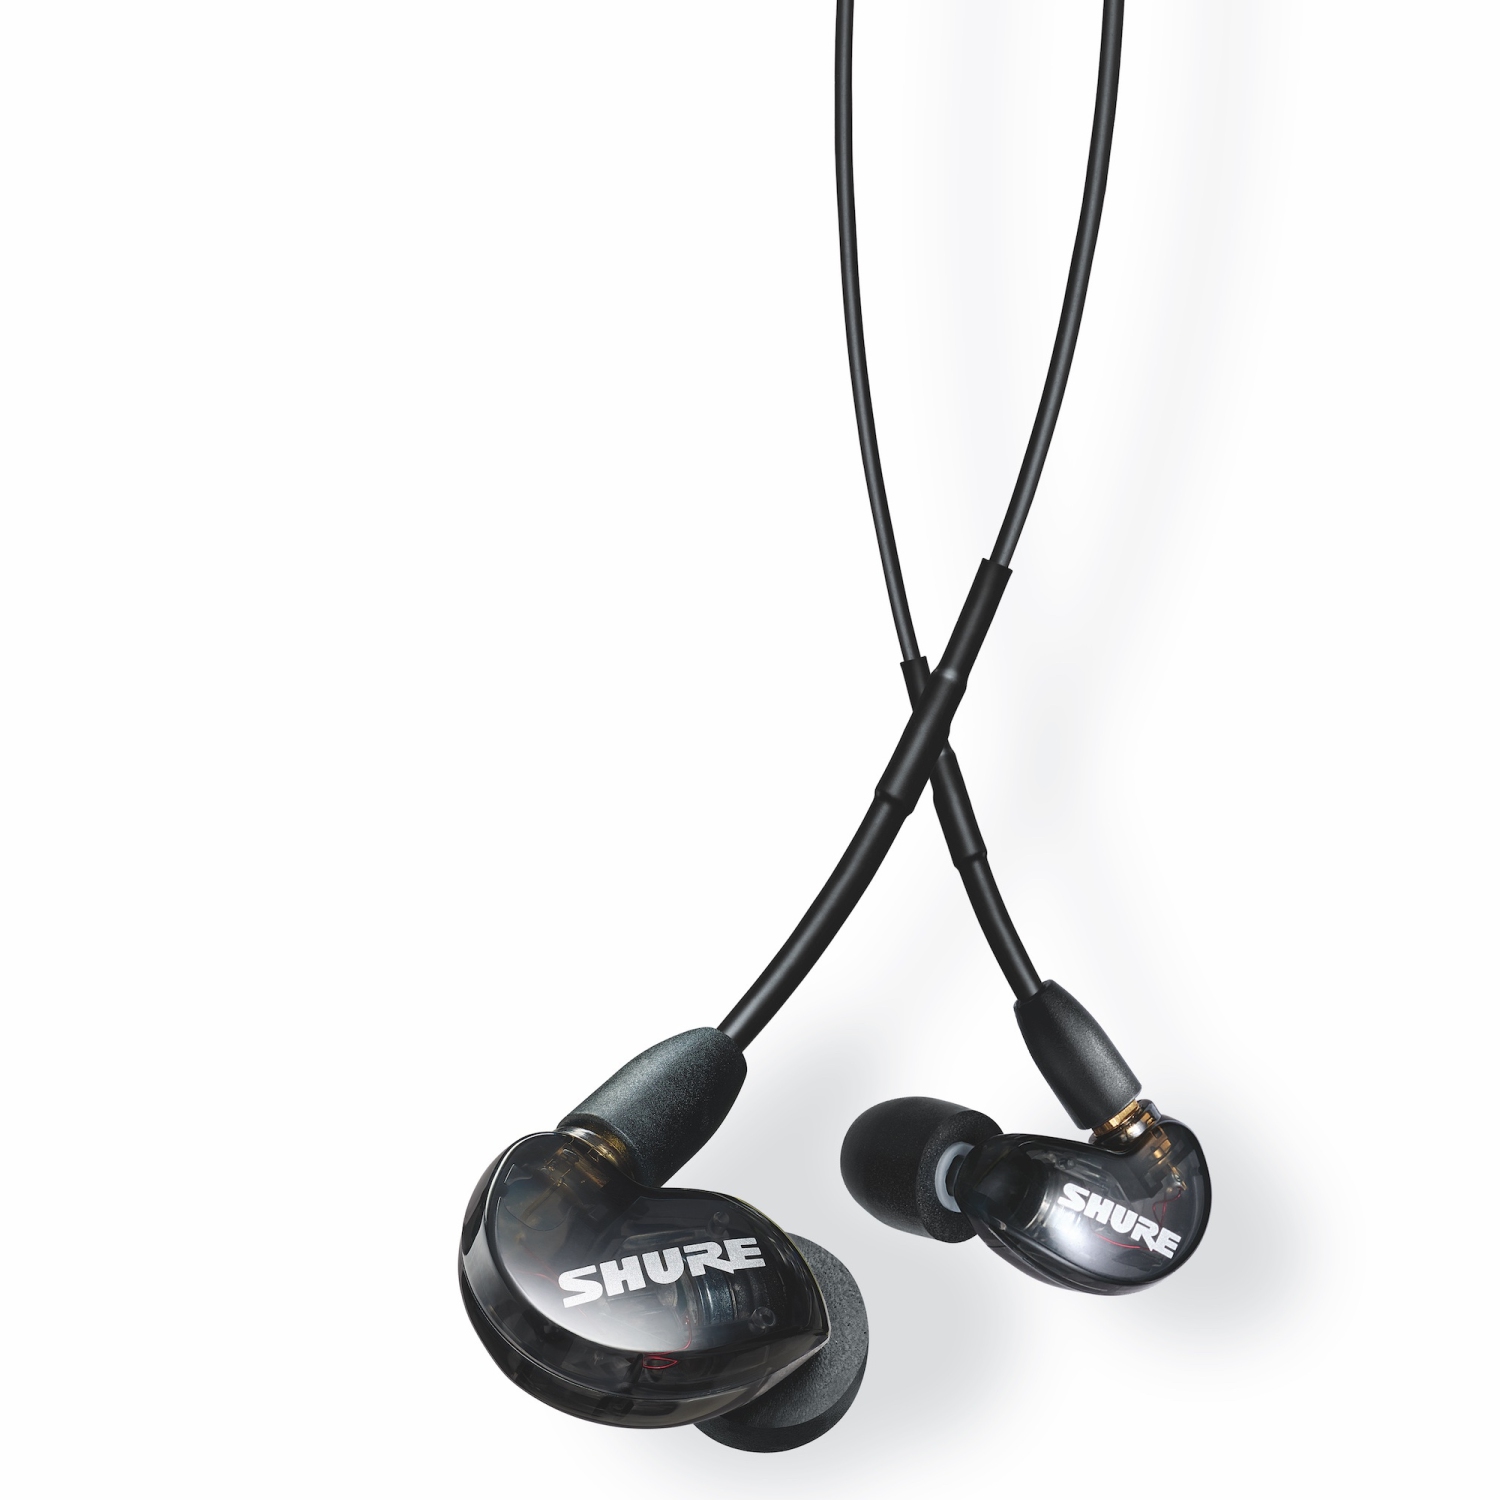 Shure SE215 - Professional Sound Isolating Earphones - Black 